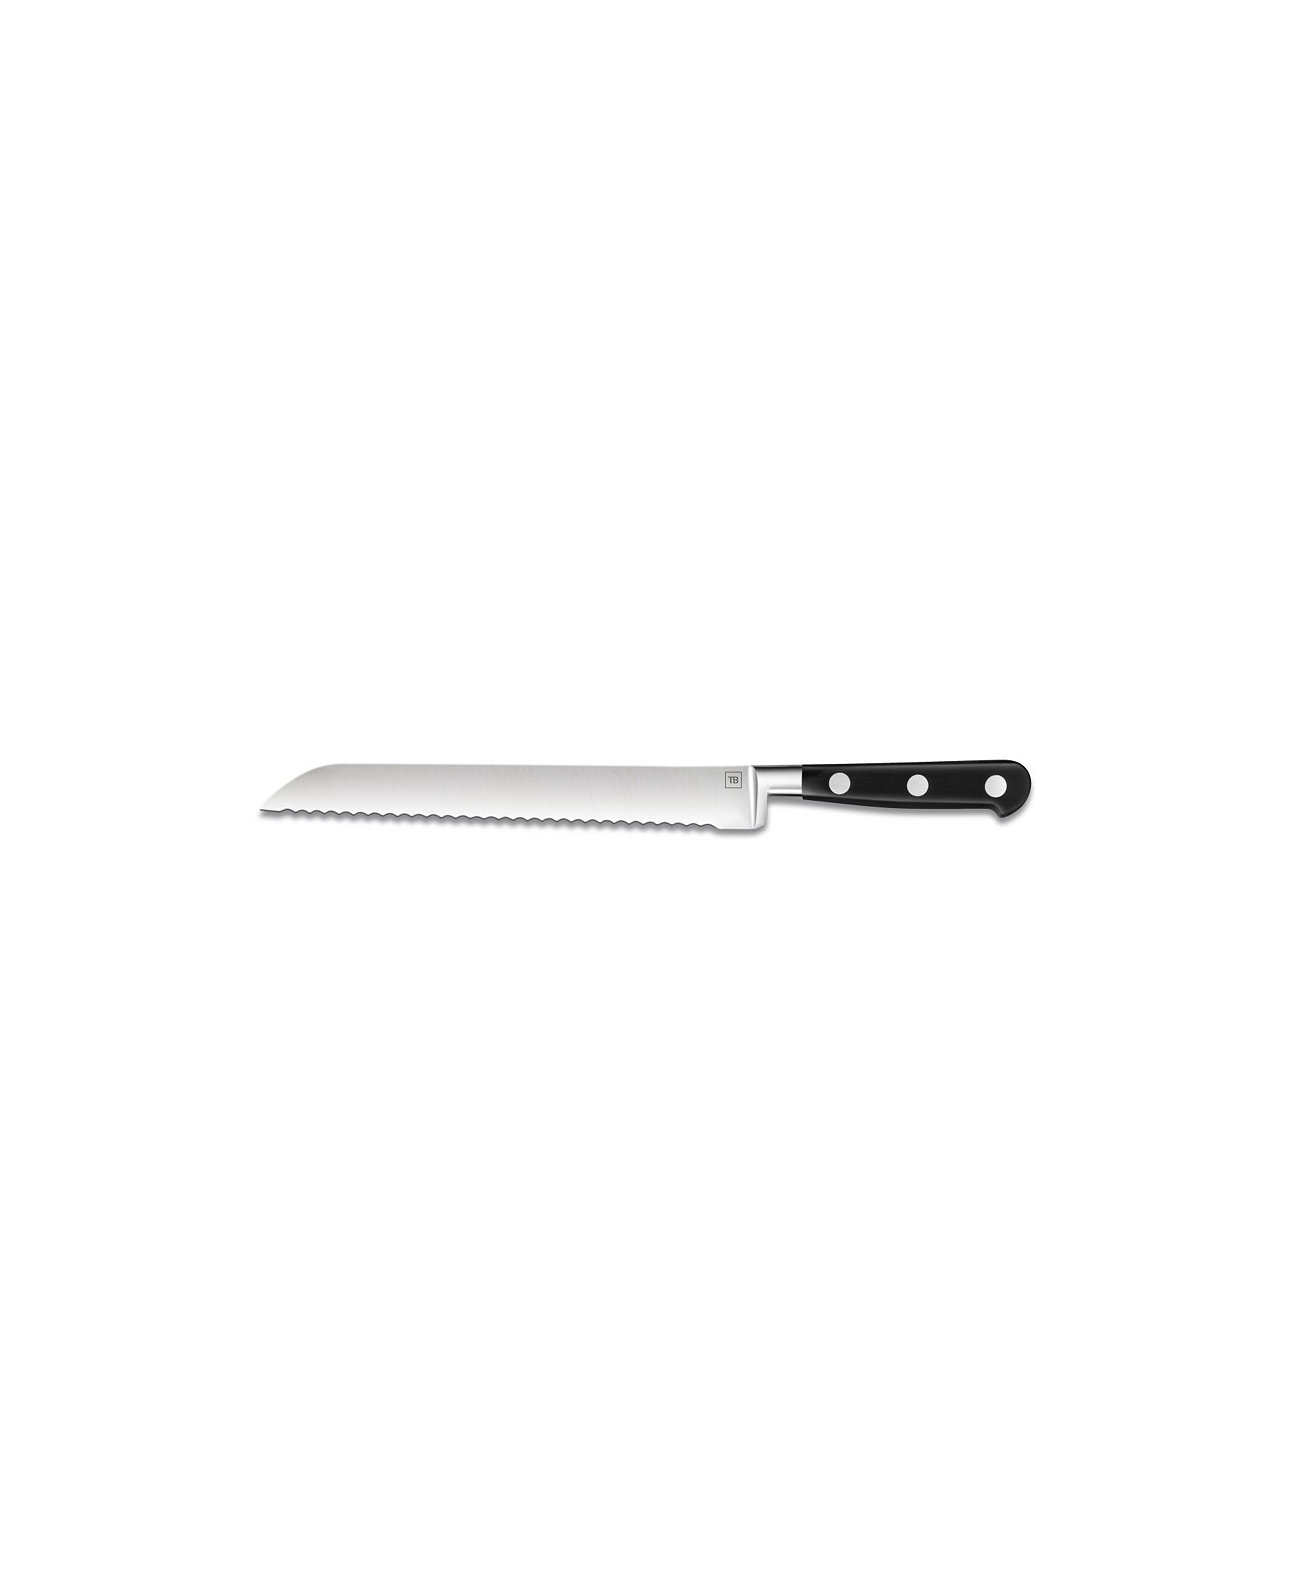 Нож для хлеба Maestro Ideal 8 дюймов TB Groupe